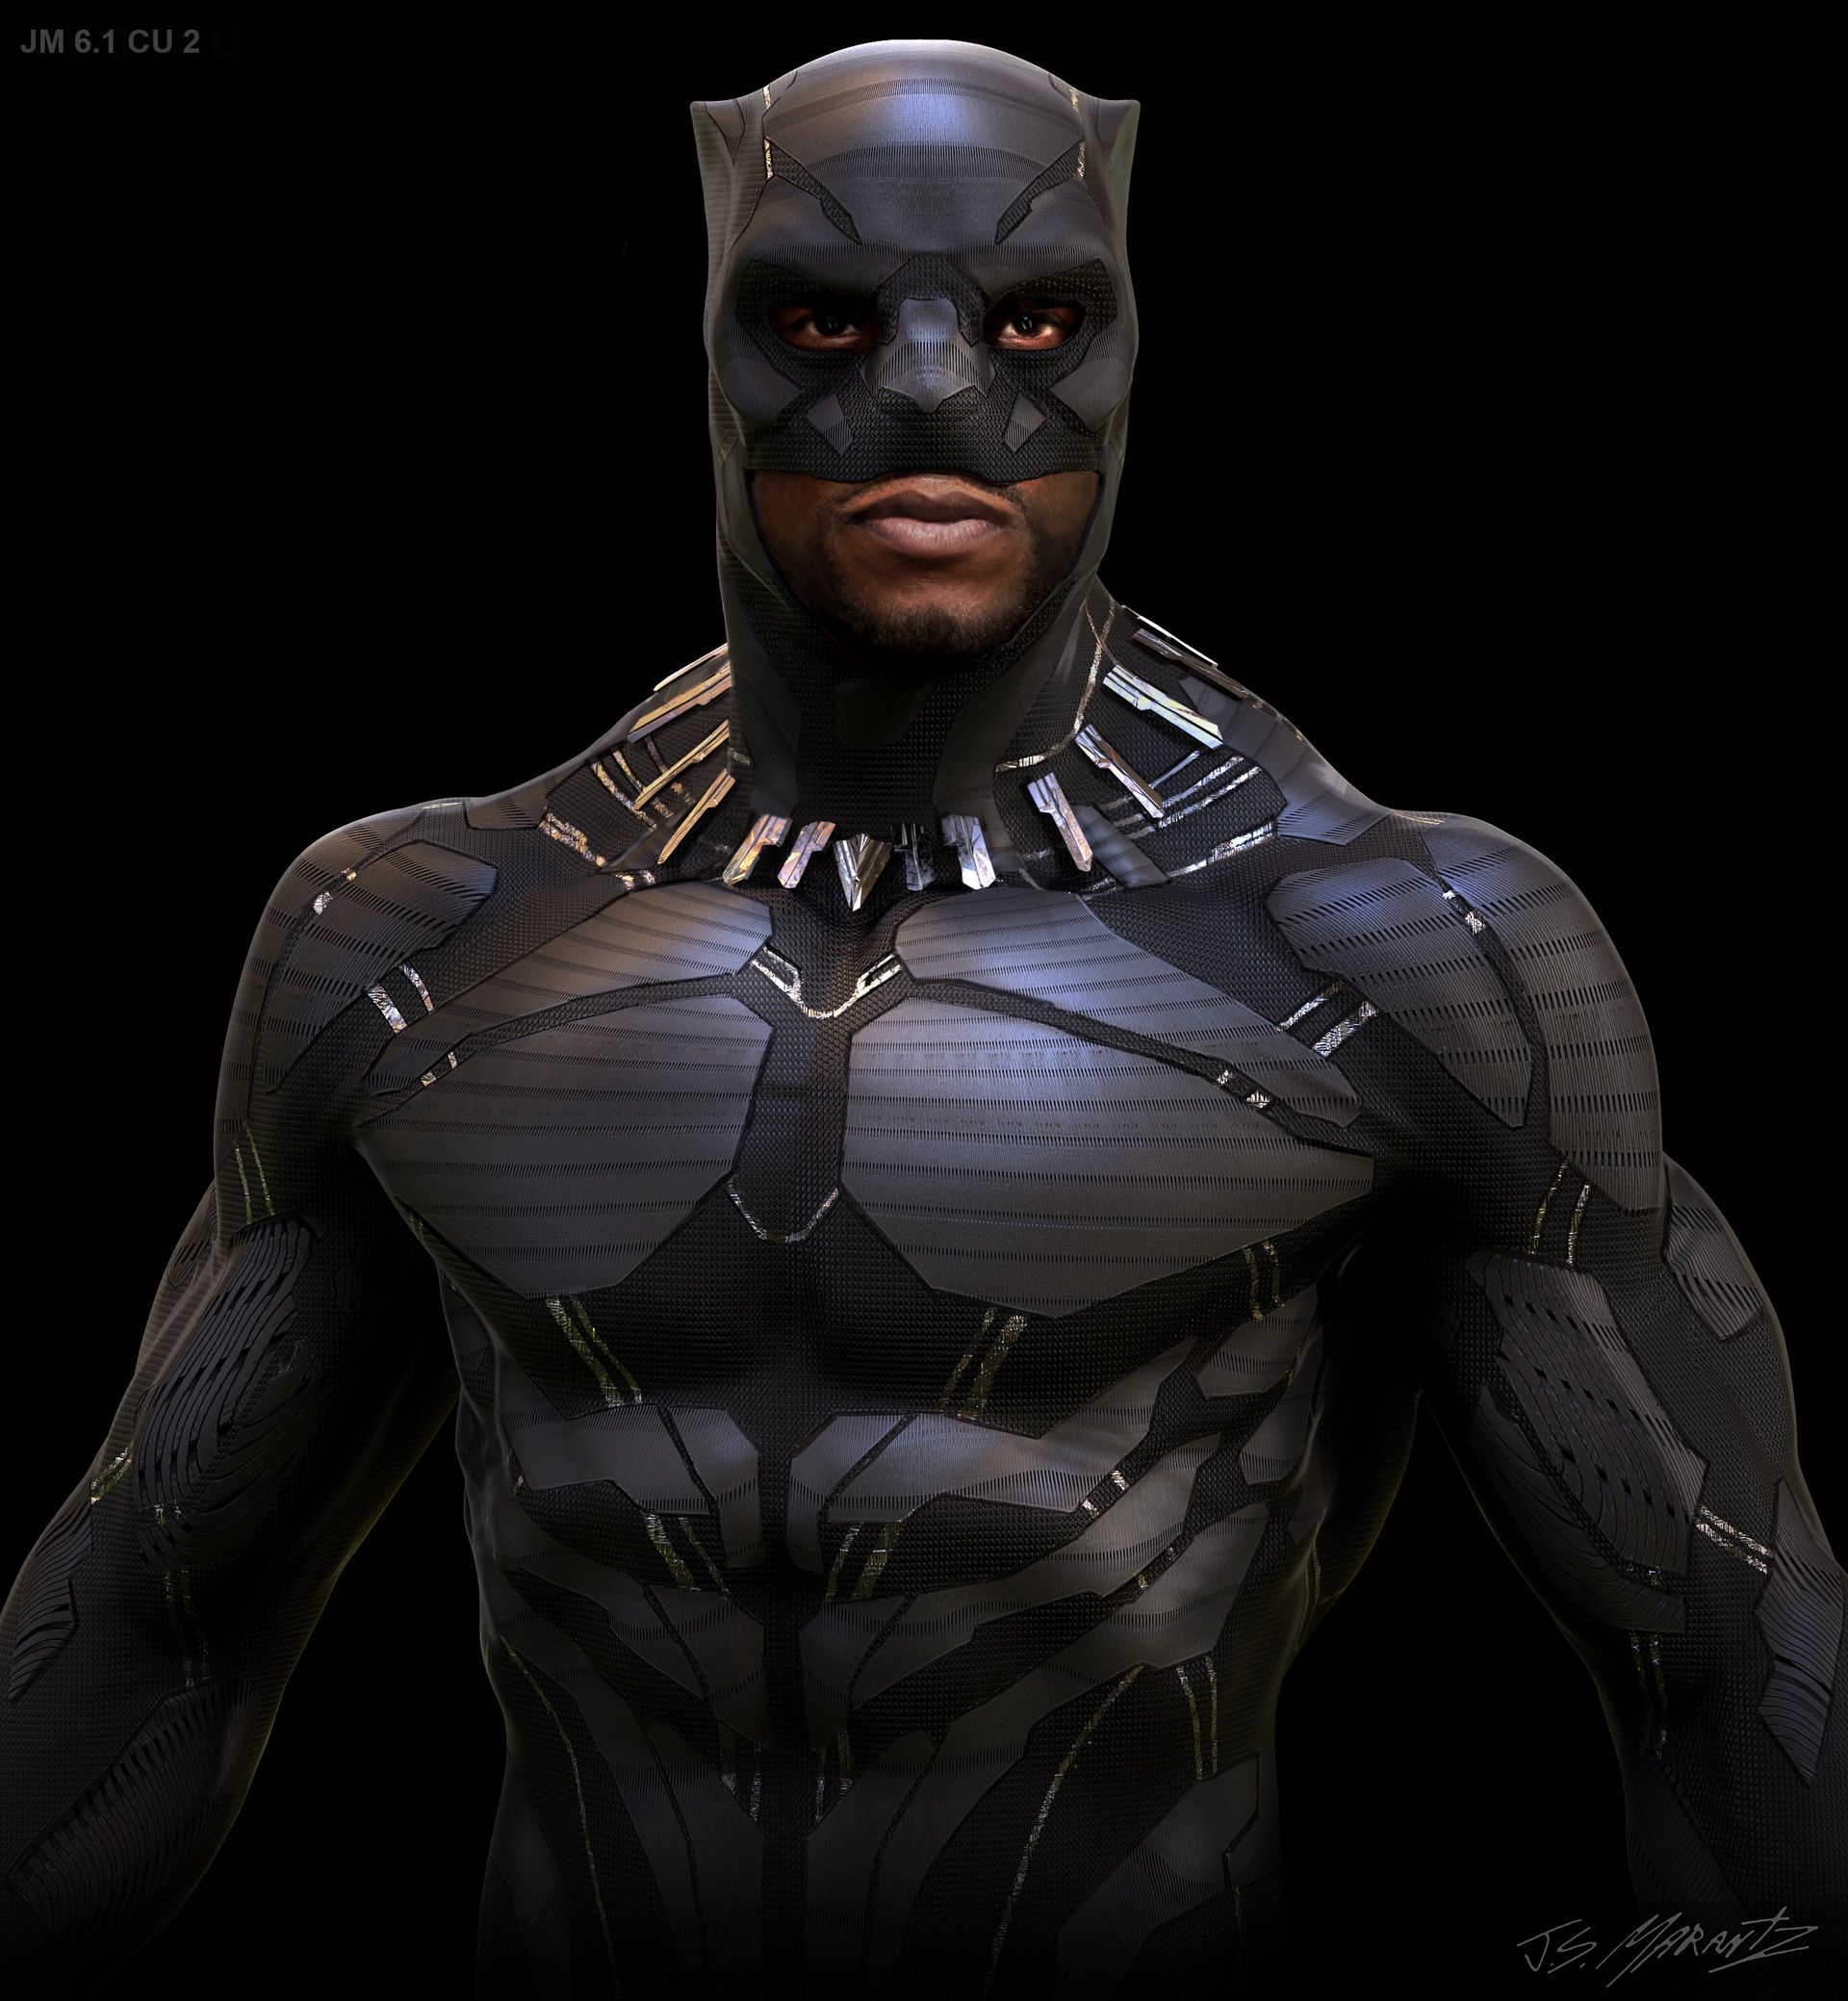 Black Panther 2 concept art